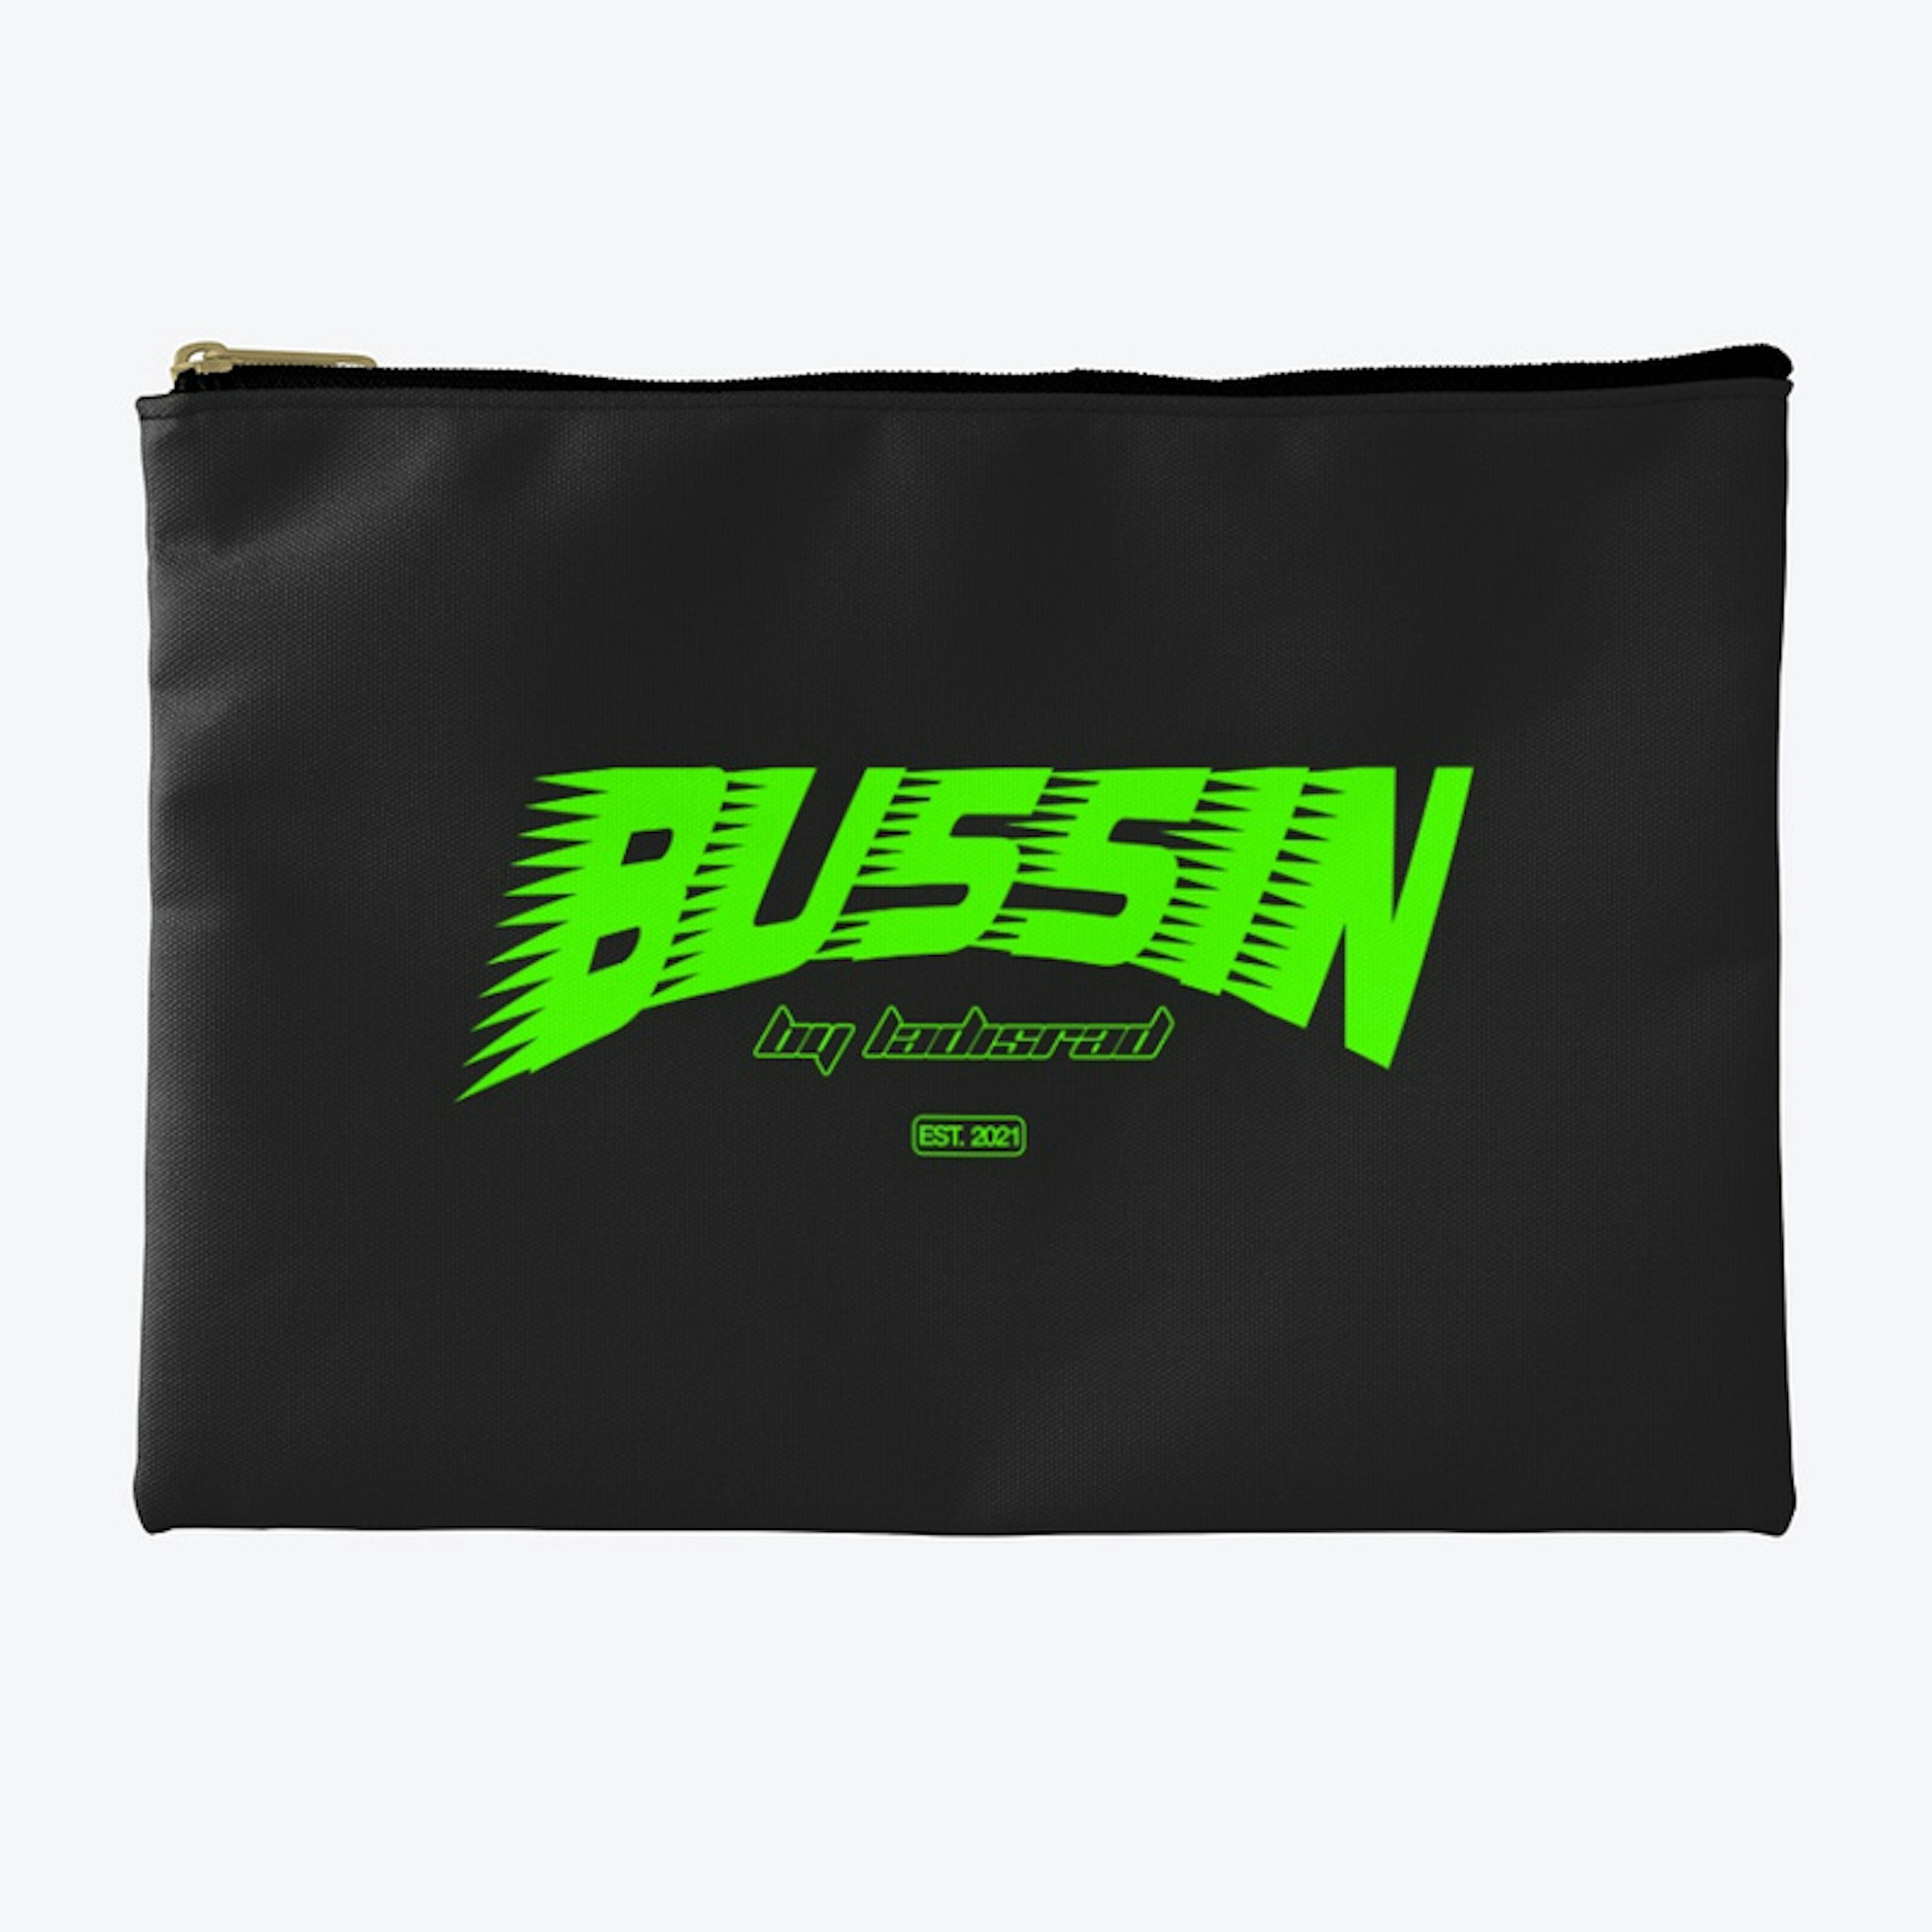 Bussin' Design